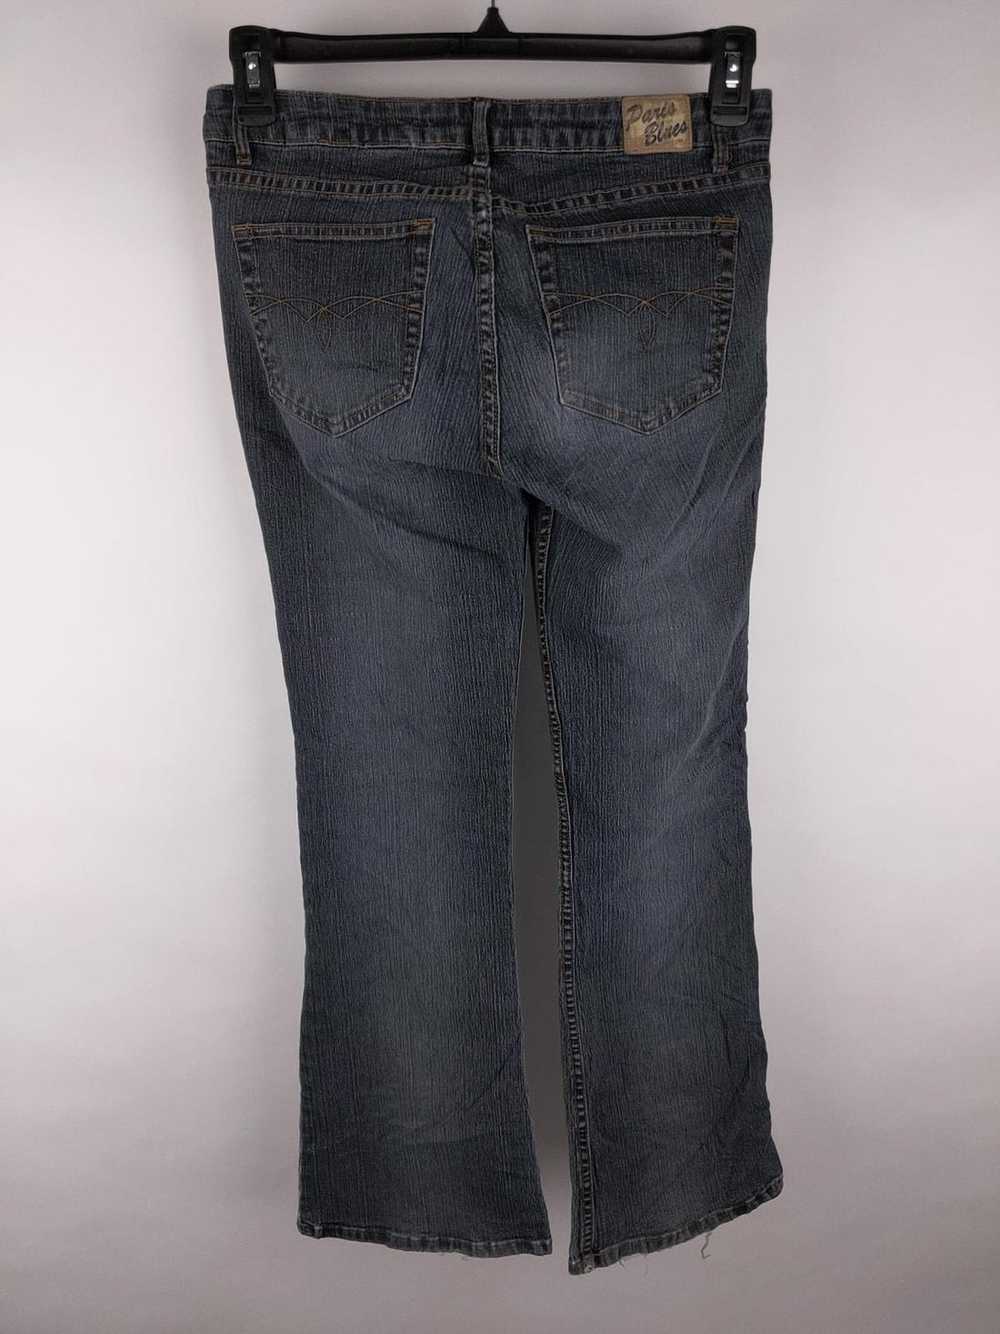 Brown Velvet Jeans, Vintage '90s Mid-rise Bootcut Pants, Women's Clothes  Size Small 